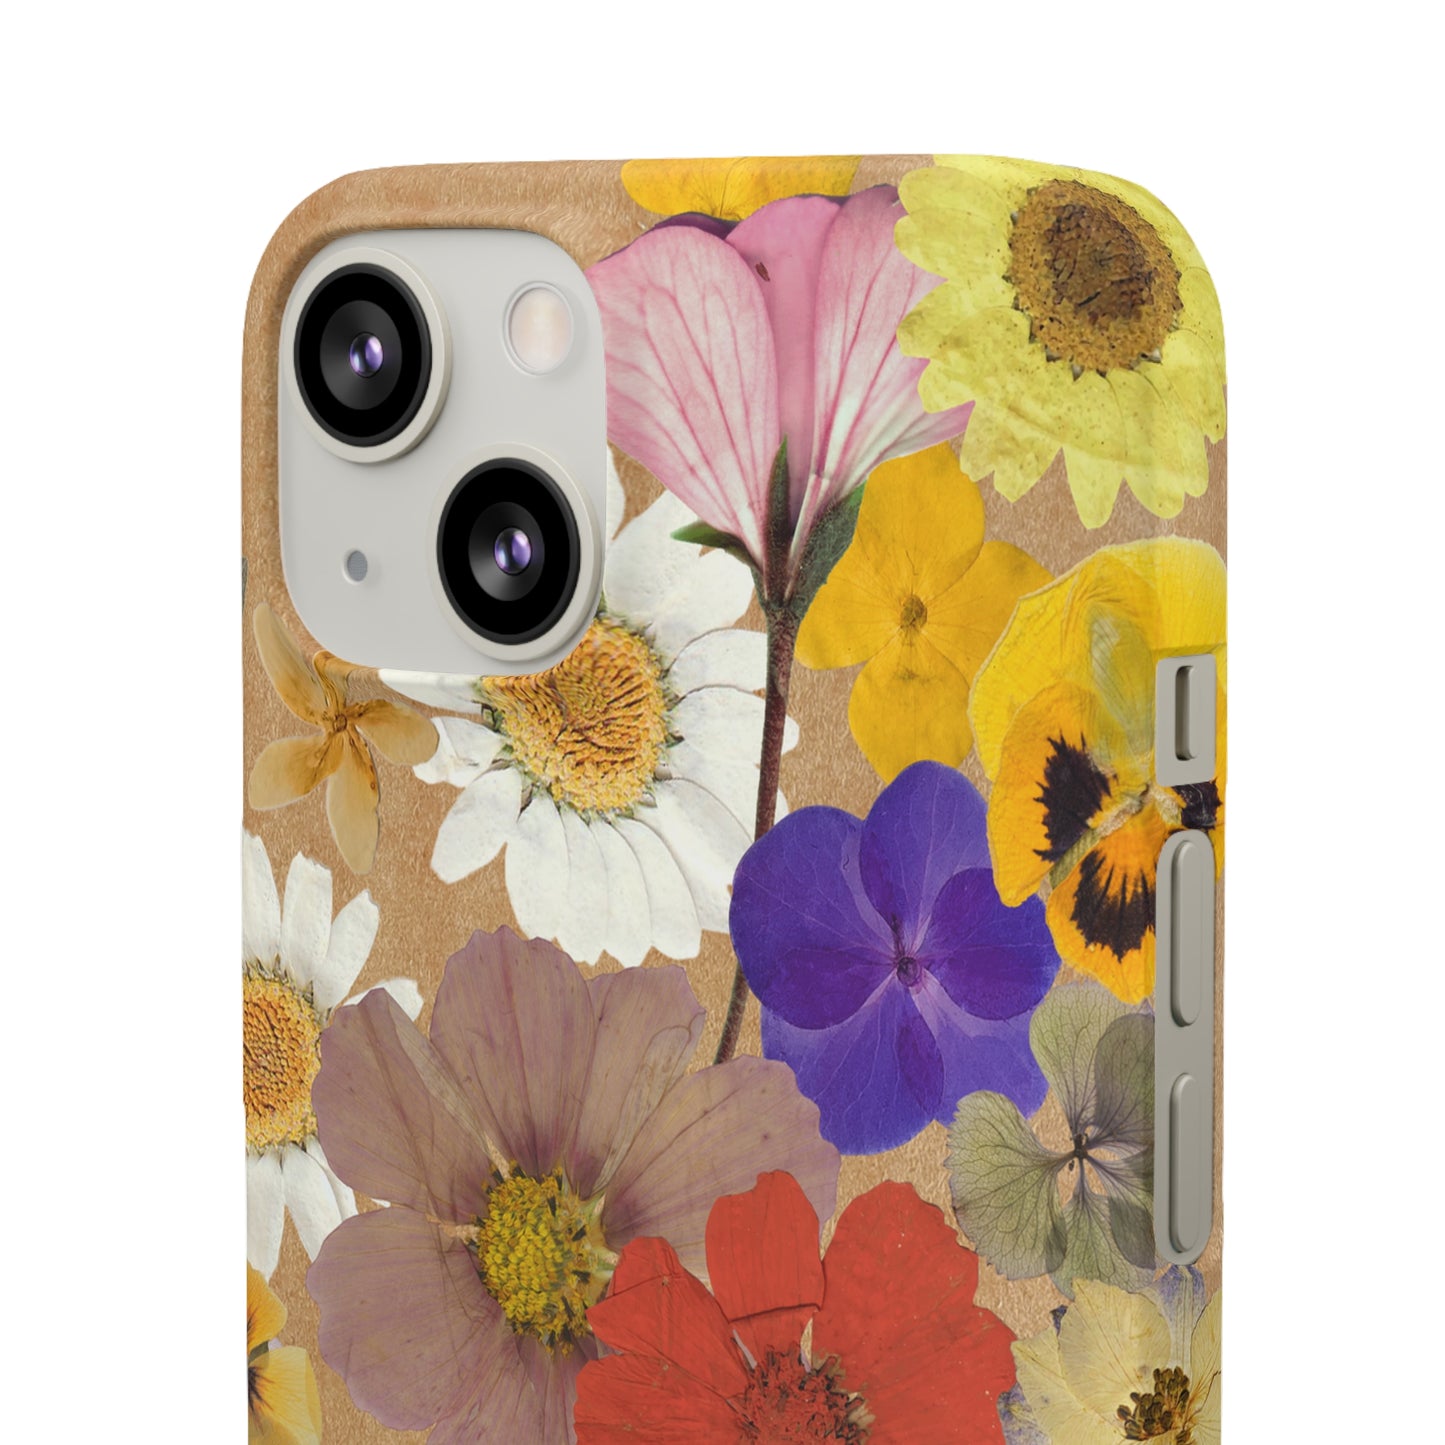 Pressed Flowers Phone Cases